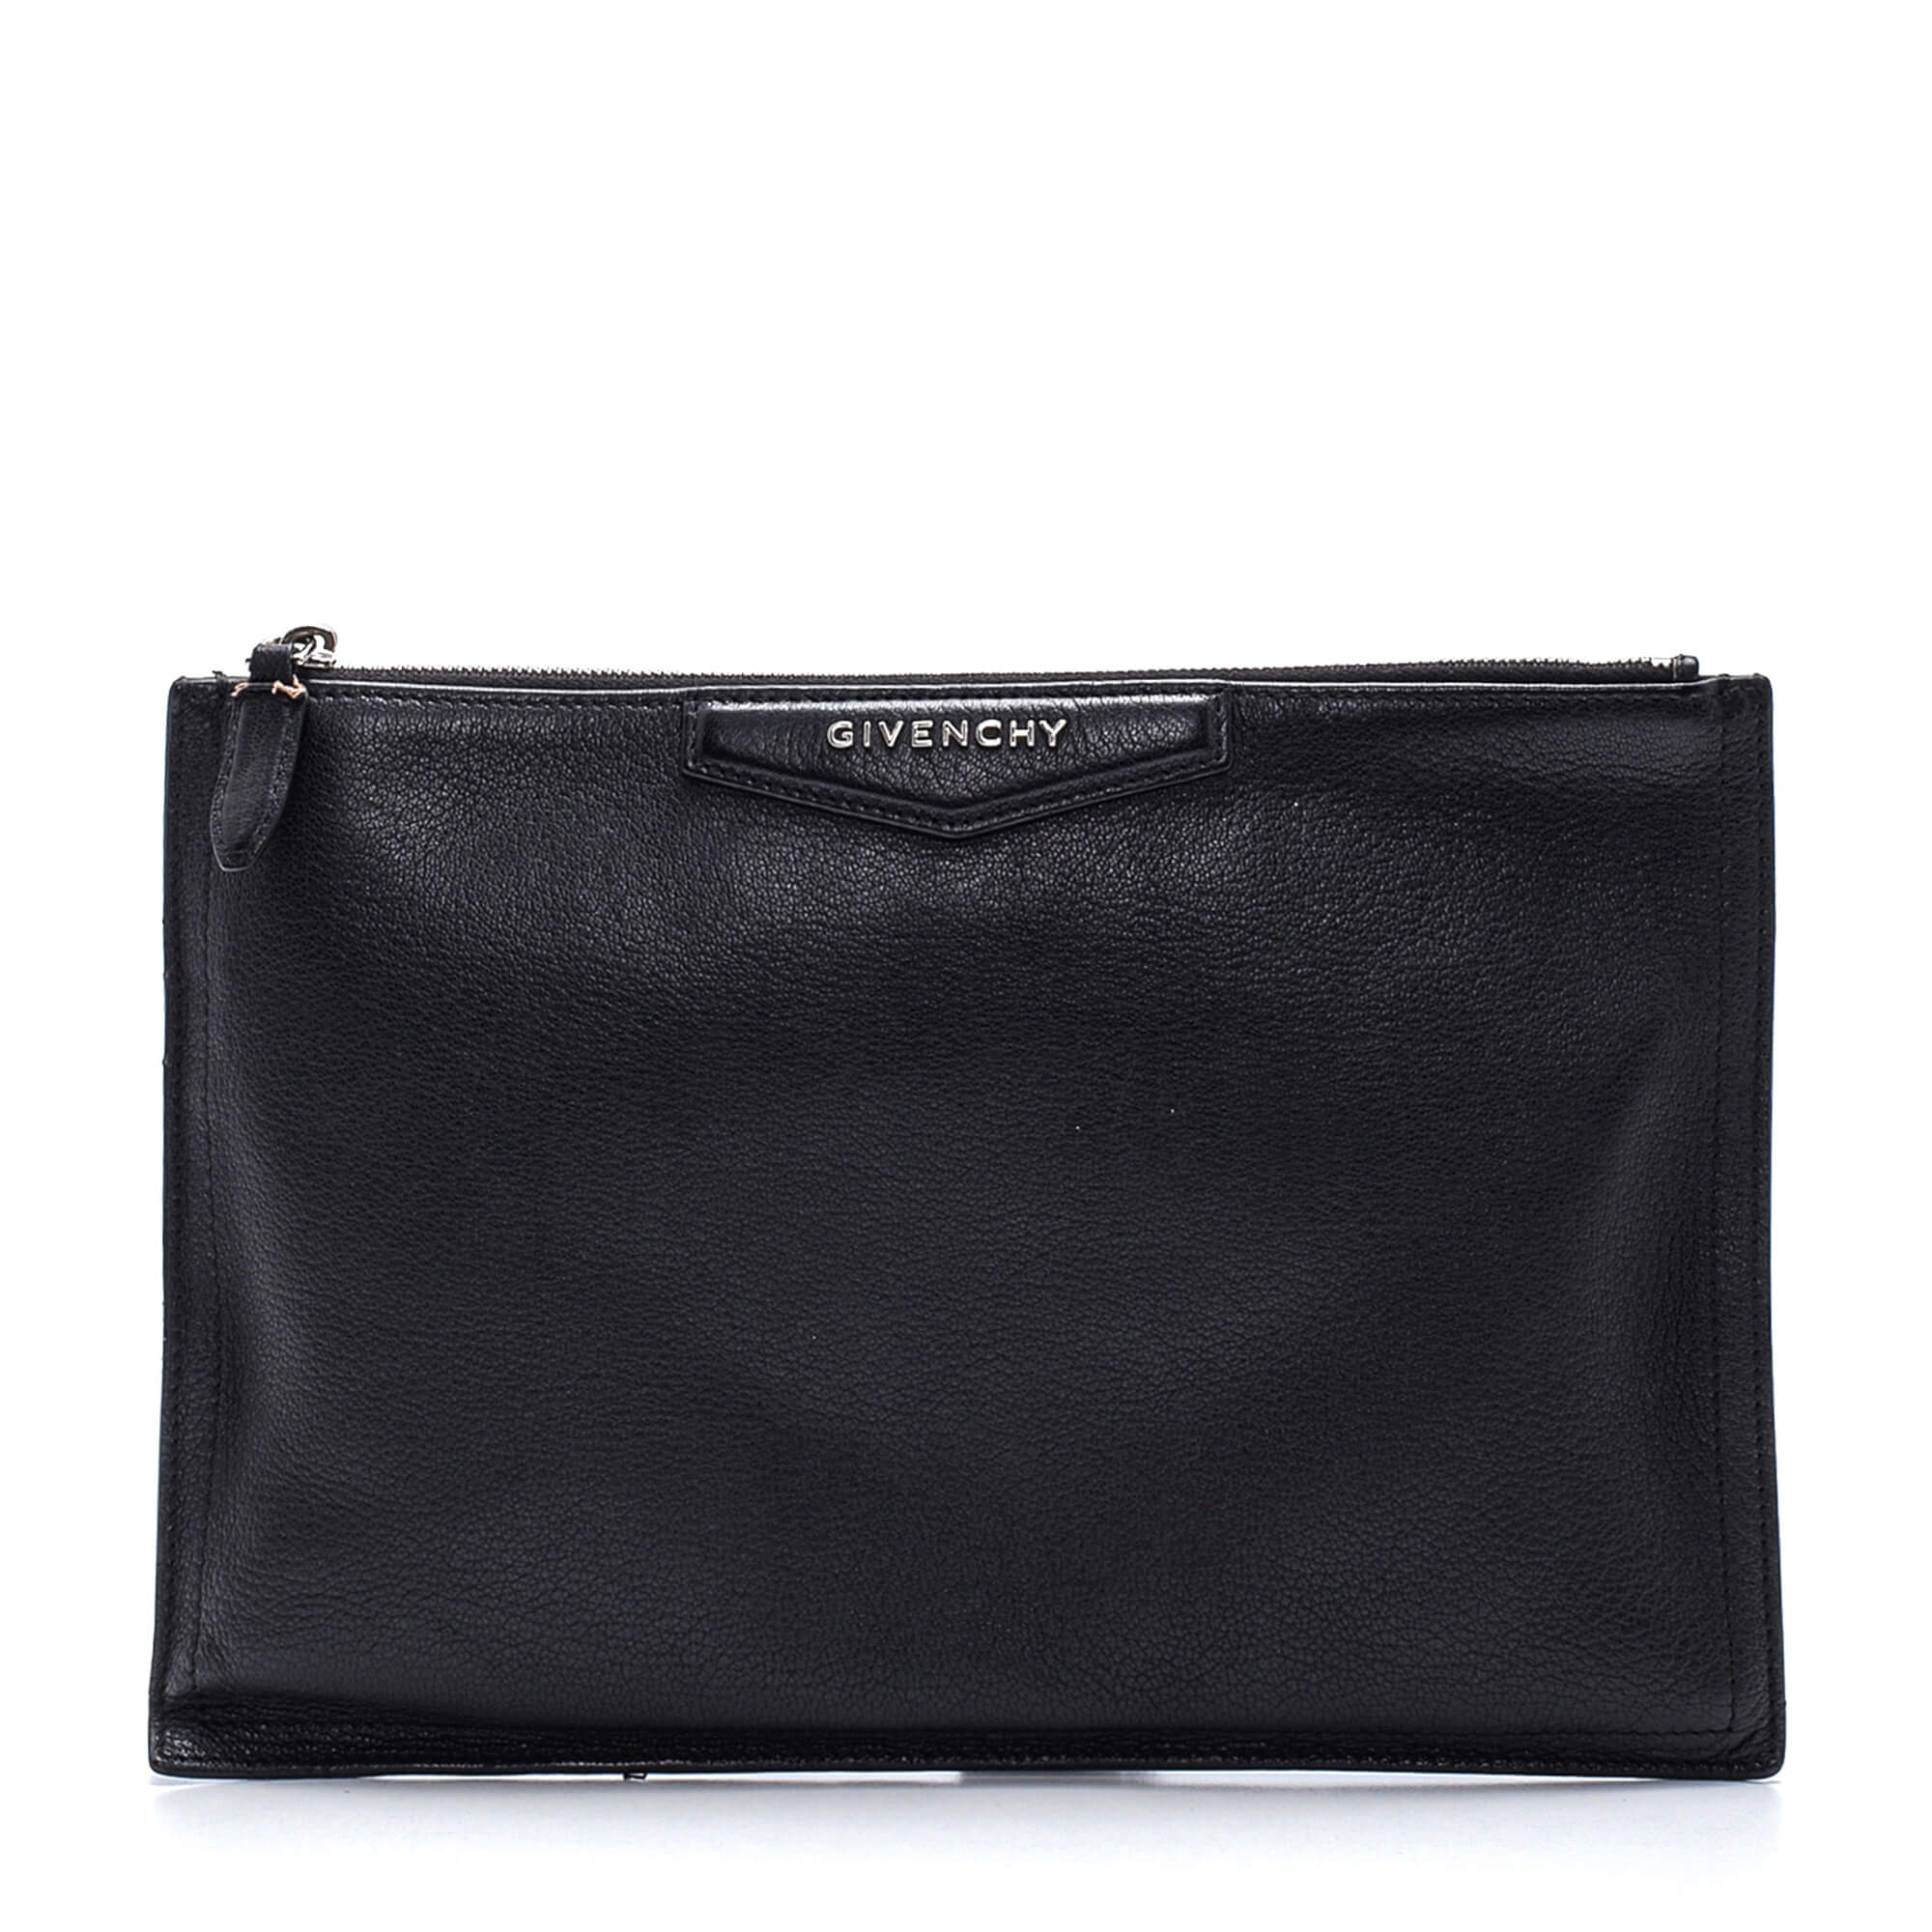 Givenchy - Black Leather Zipped Antigona Clutch 